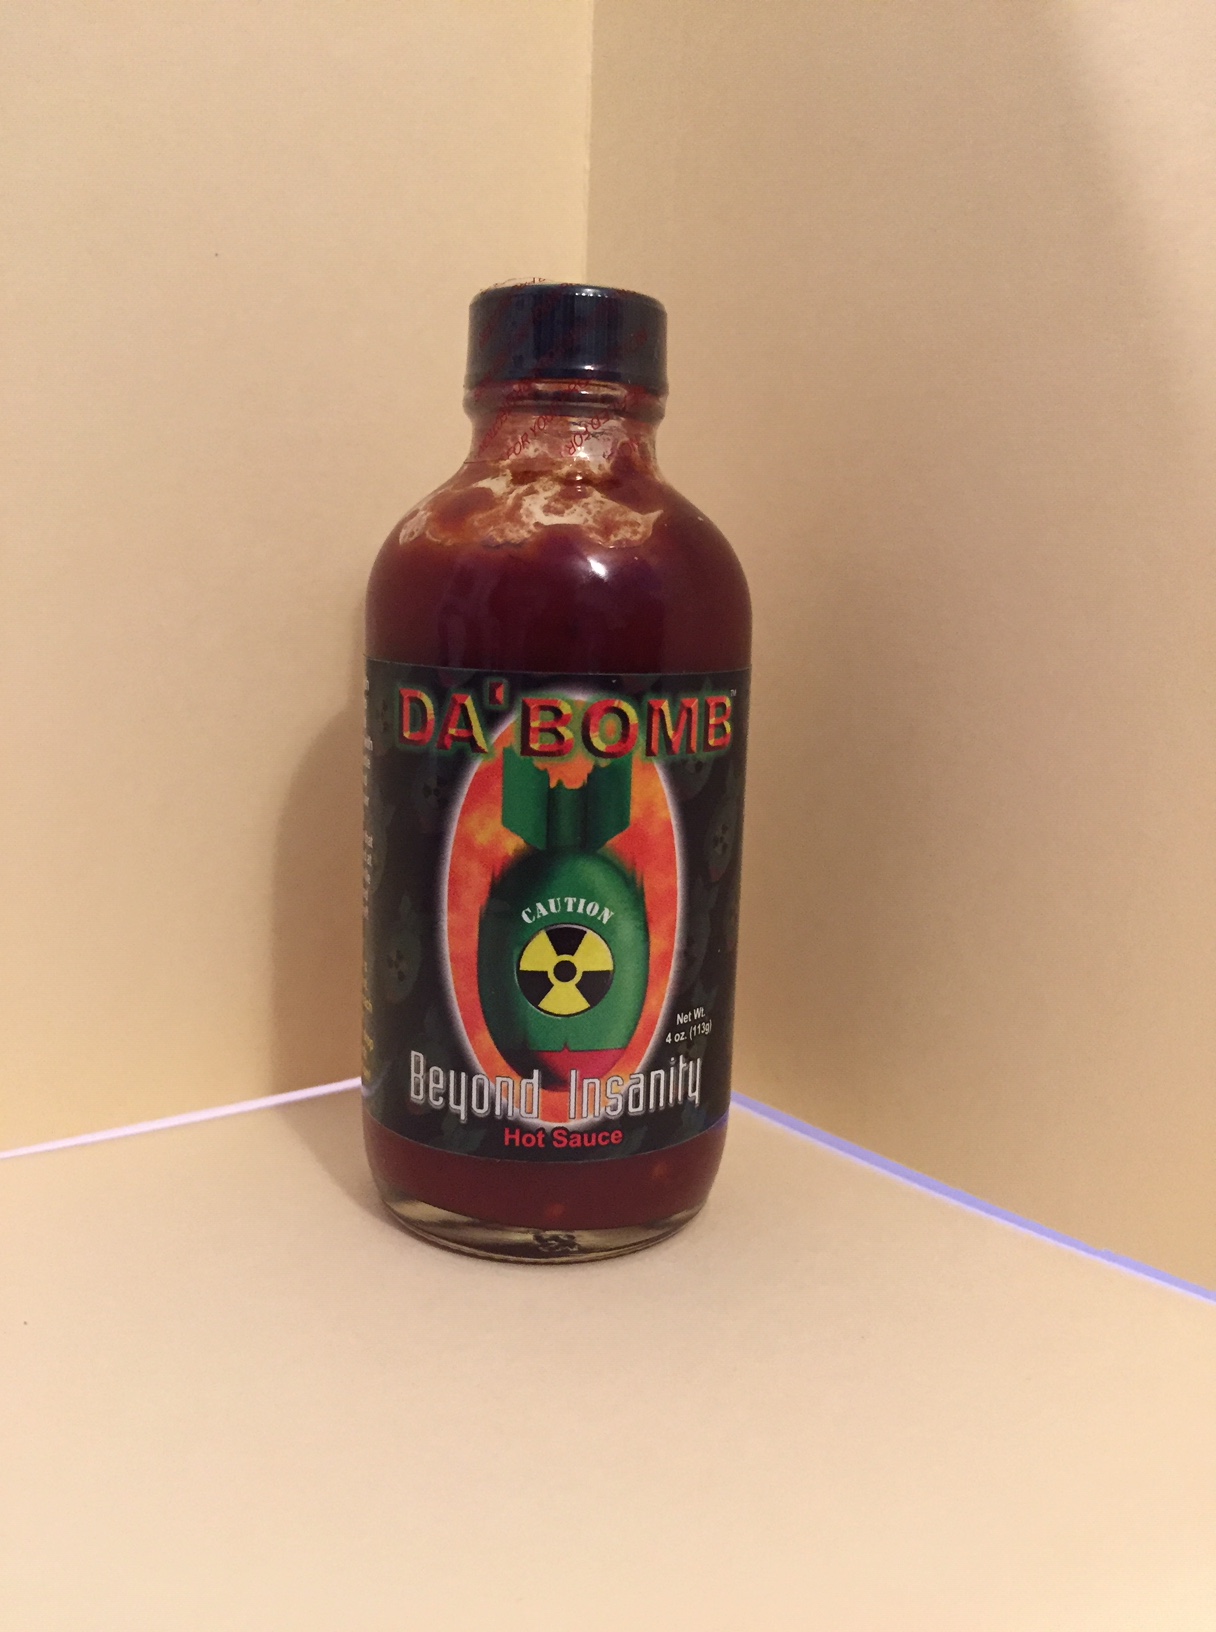 Da Bomb Beyond Insanity Hot Sauce, Bottle